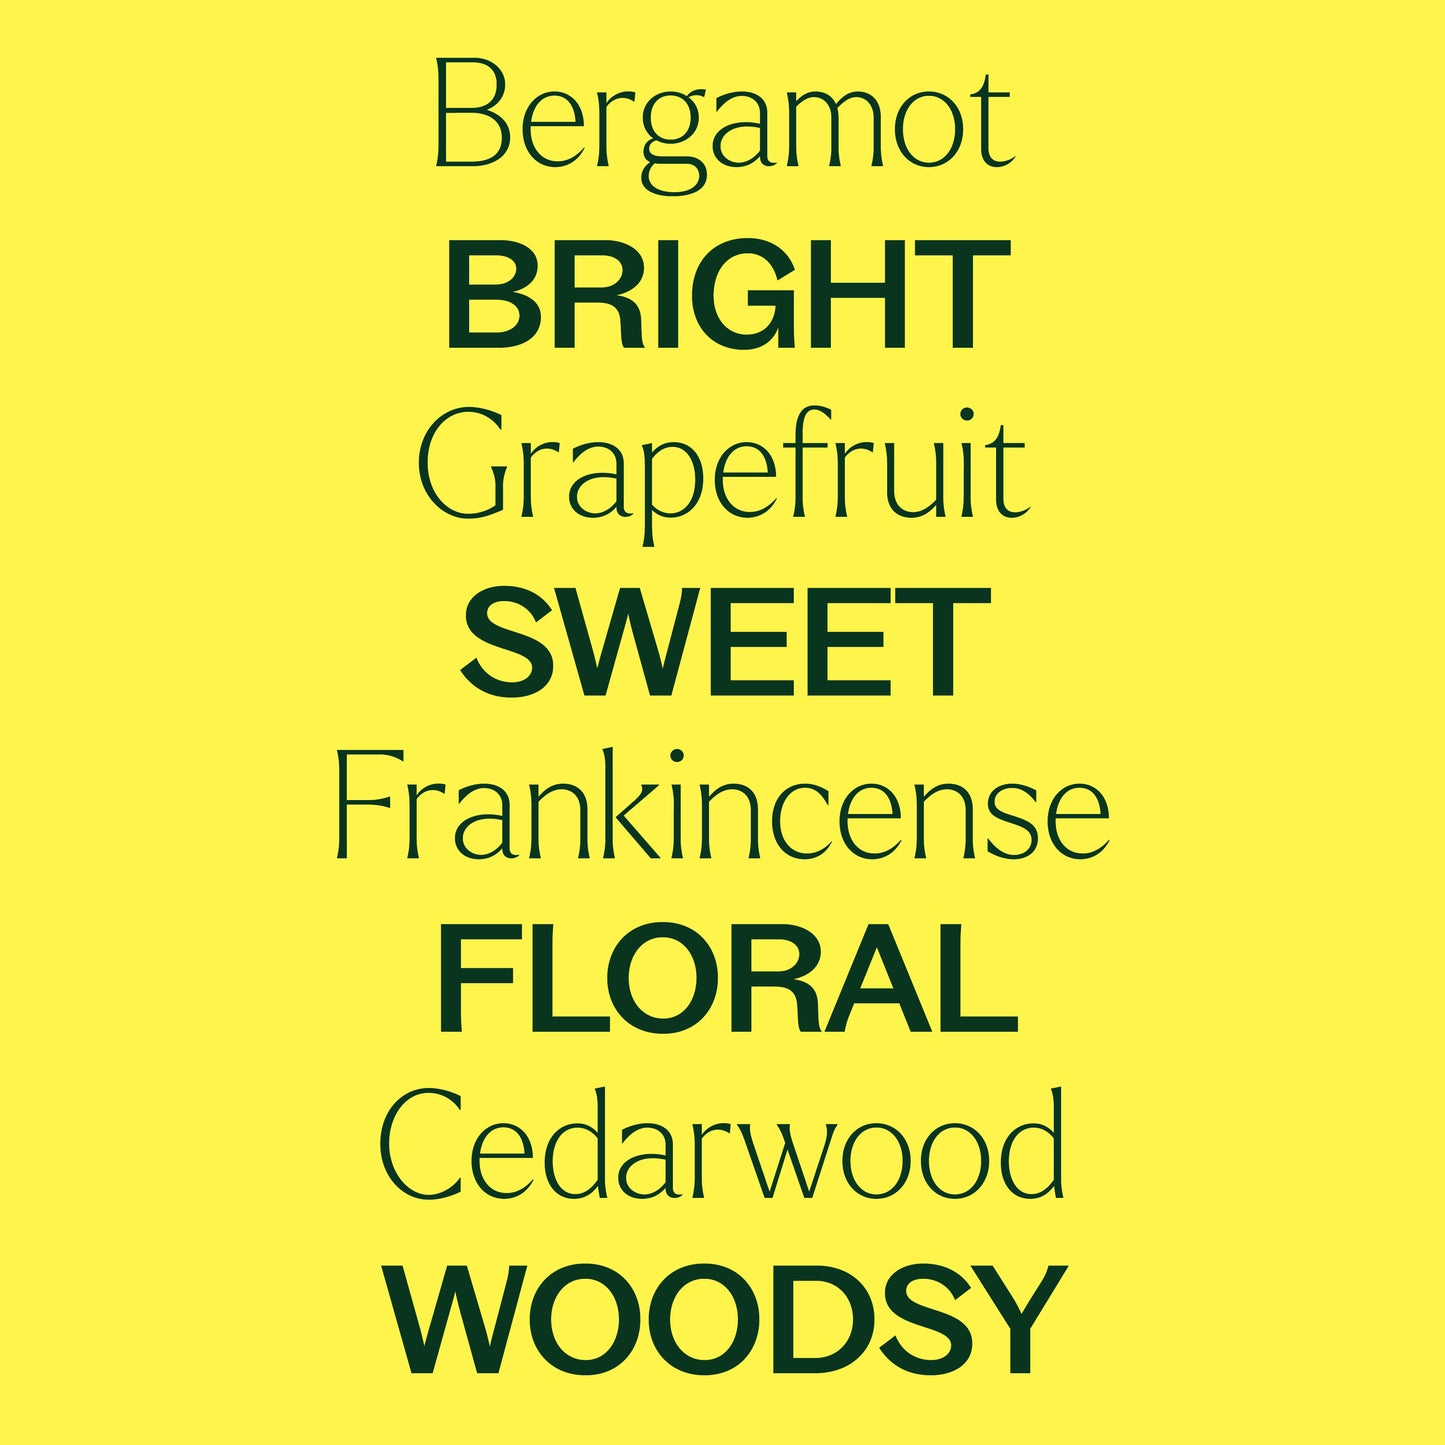 Bergamot, grapefruit, frankincense, cedarwood. Bright, sweet, floral, woodsy